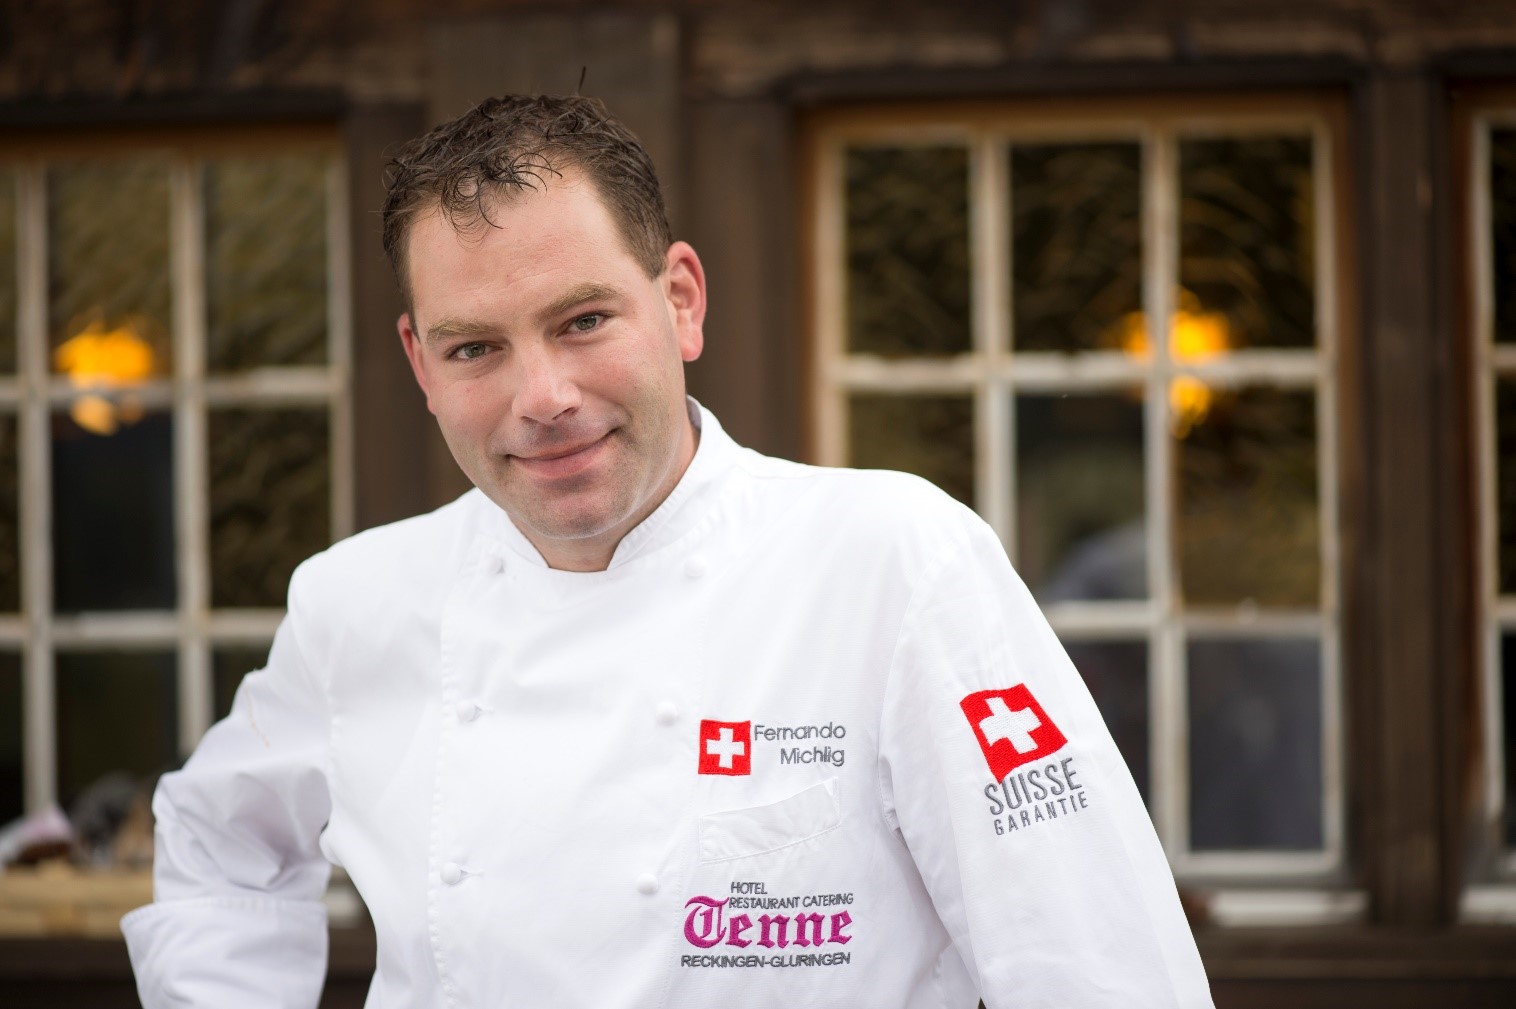 Fernando Michlig vom Restaurant Tenne | Gilde